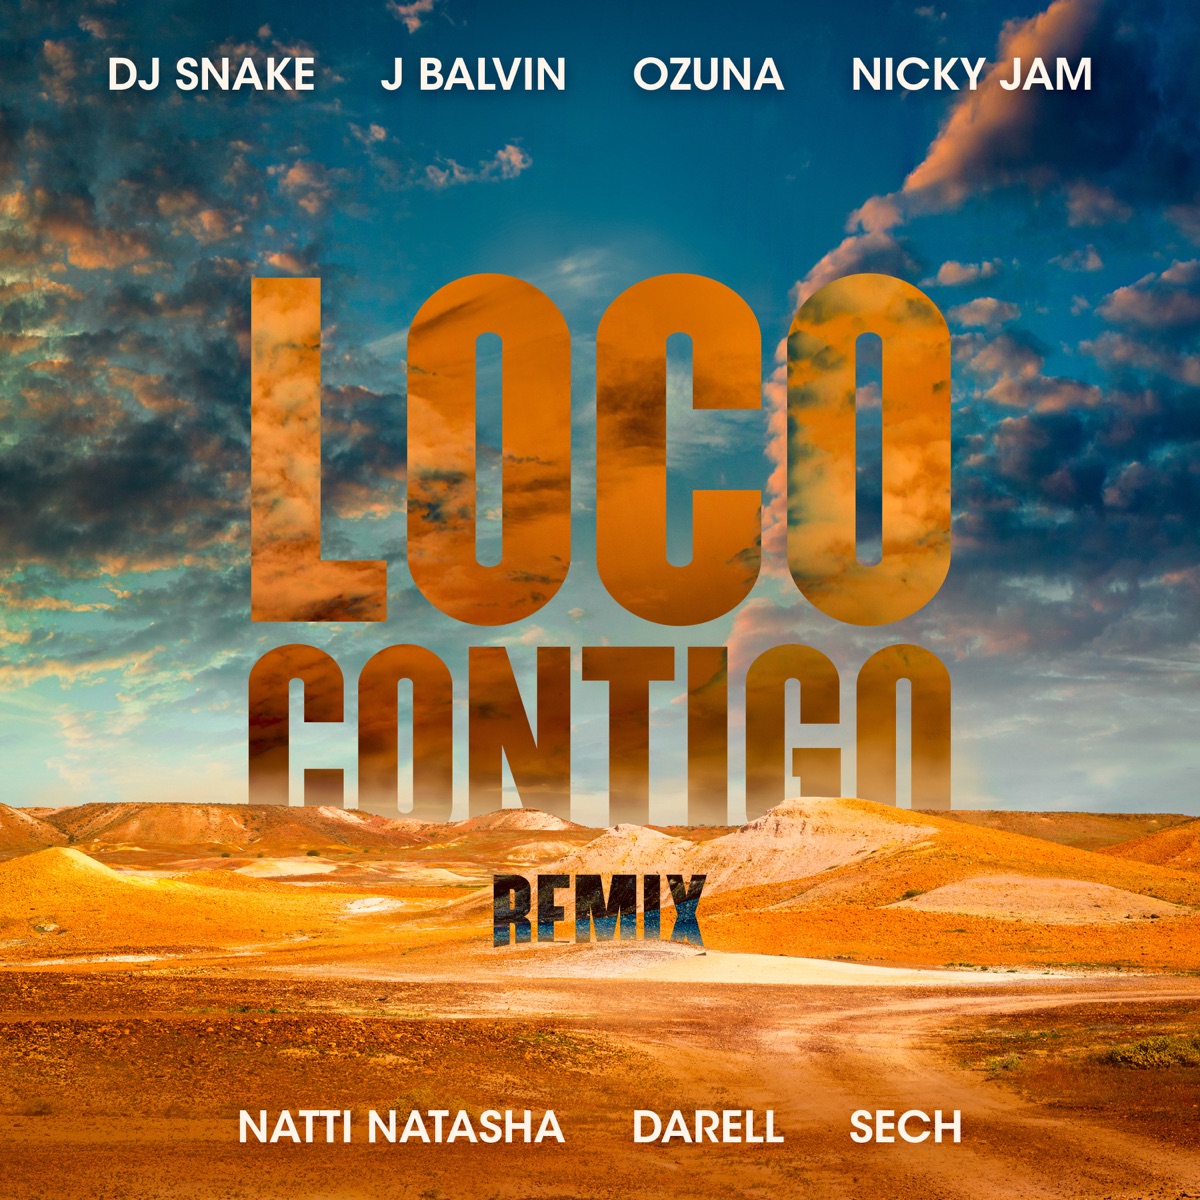 Loco Contigo (feat. Tyga) - Single - Album by DJ Snake & J Balvin - Apple  Music